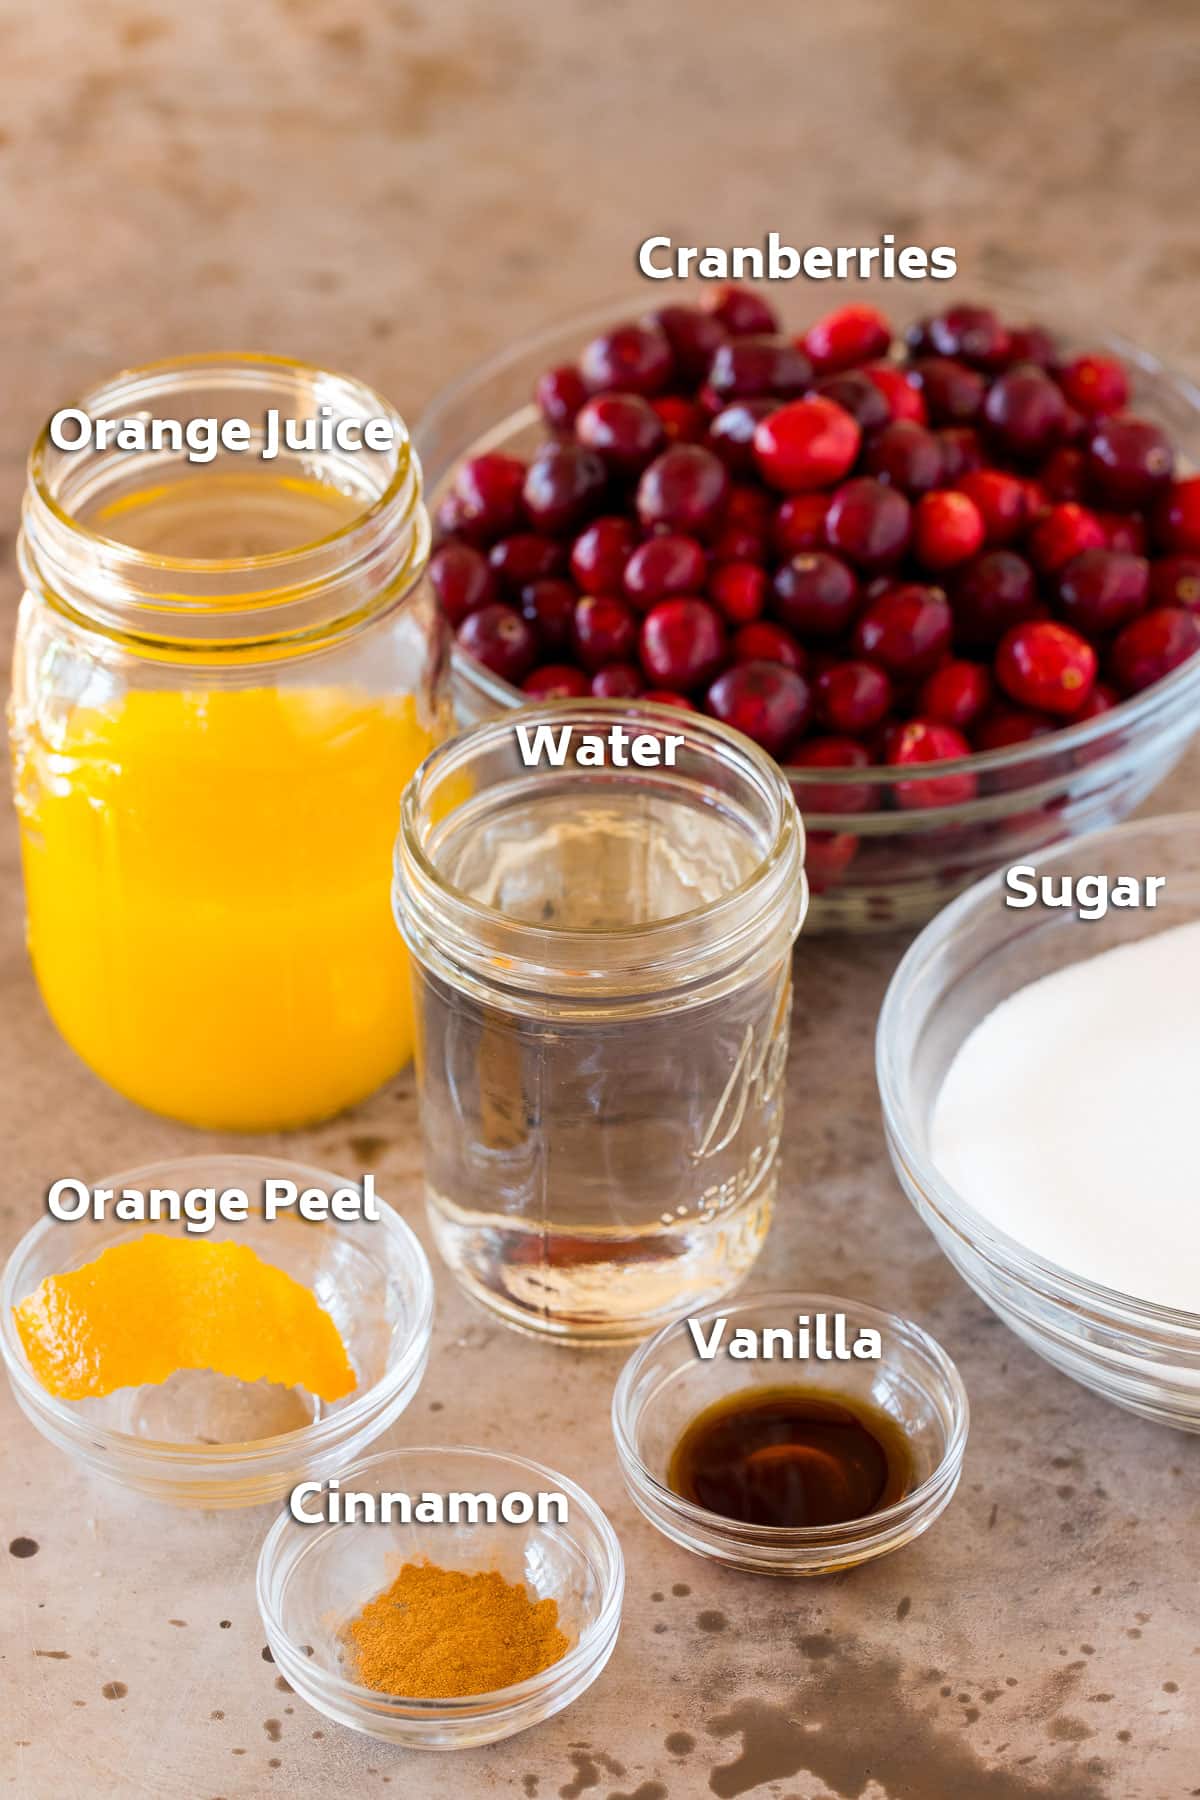 Bowls and jars of ingredients including cranberries, orange juice, and sugar.